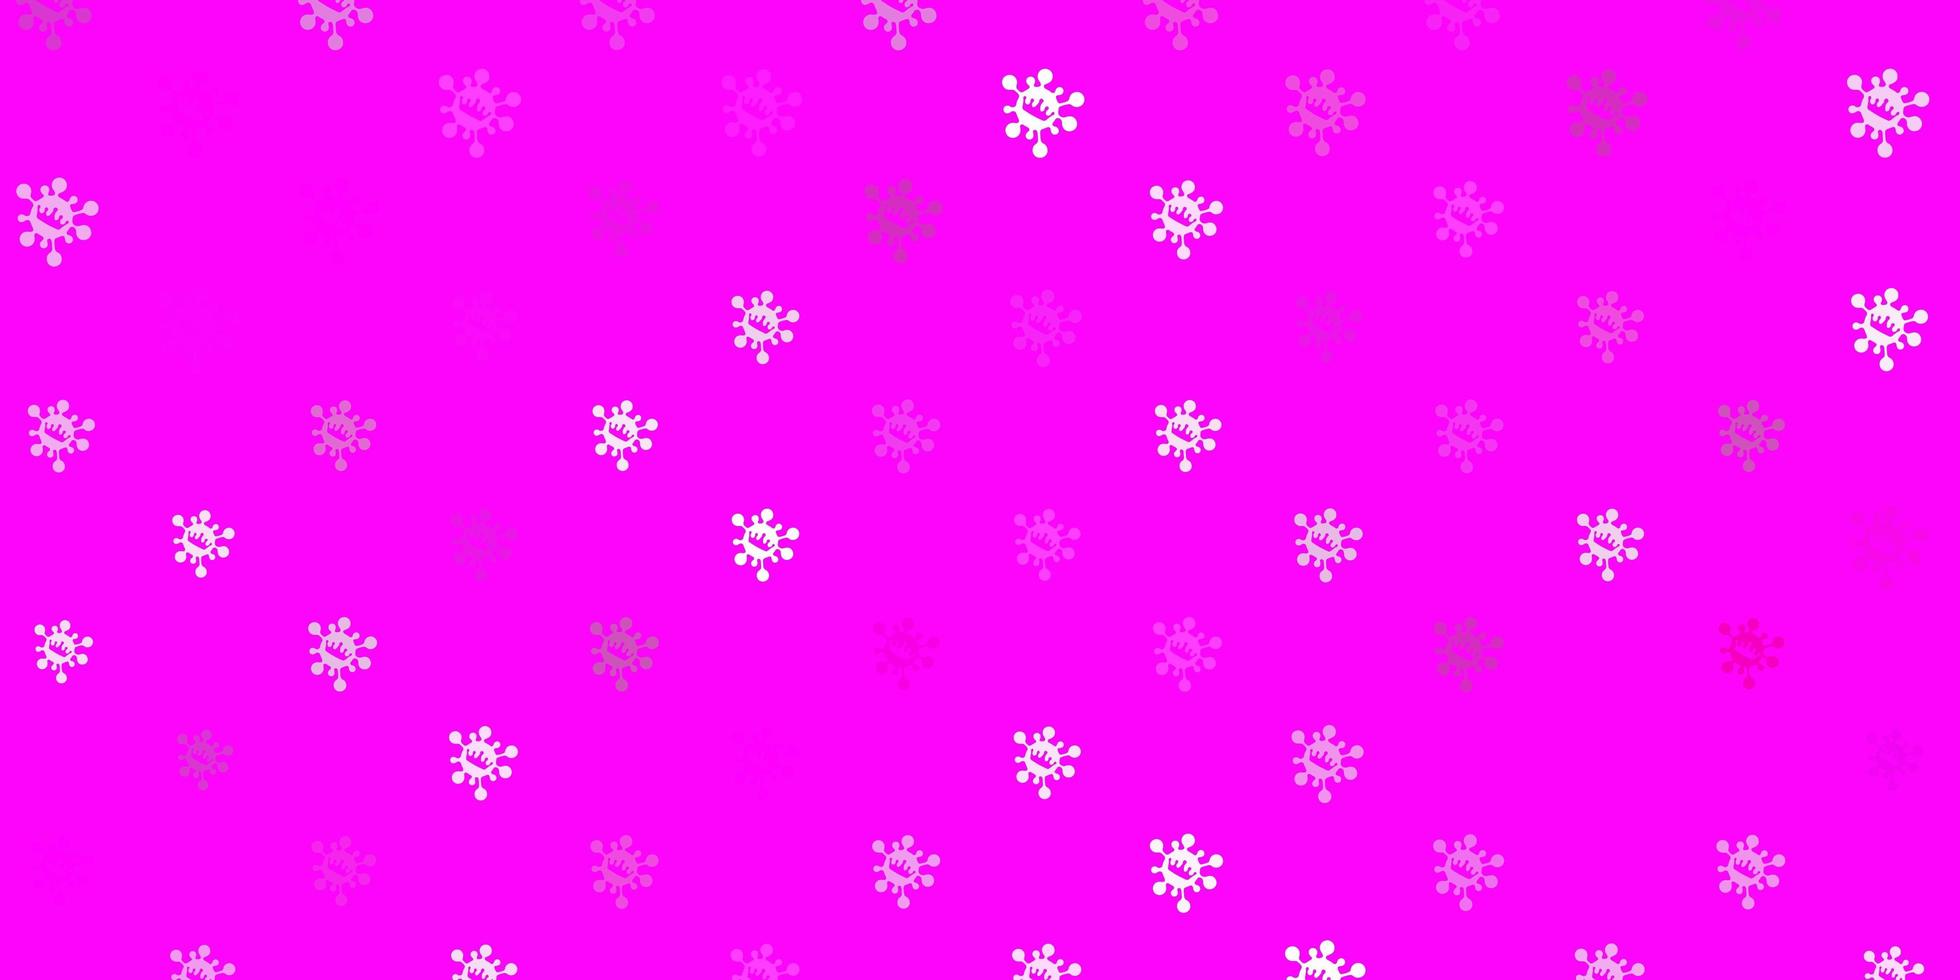 Light pink vector pattern with coronavirus elements